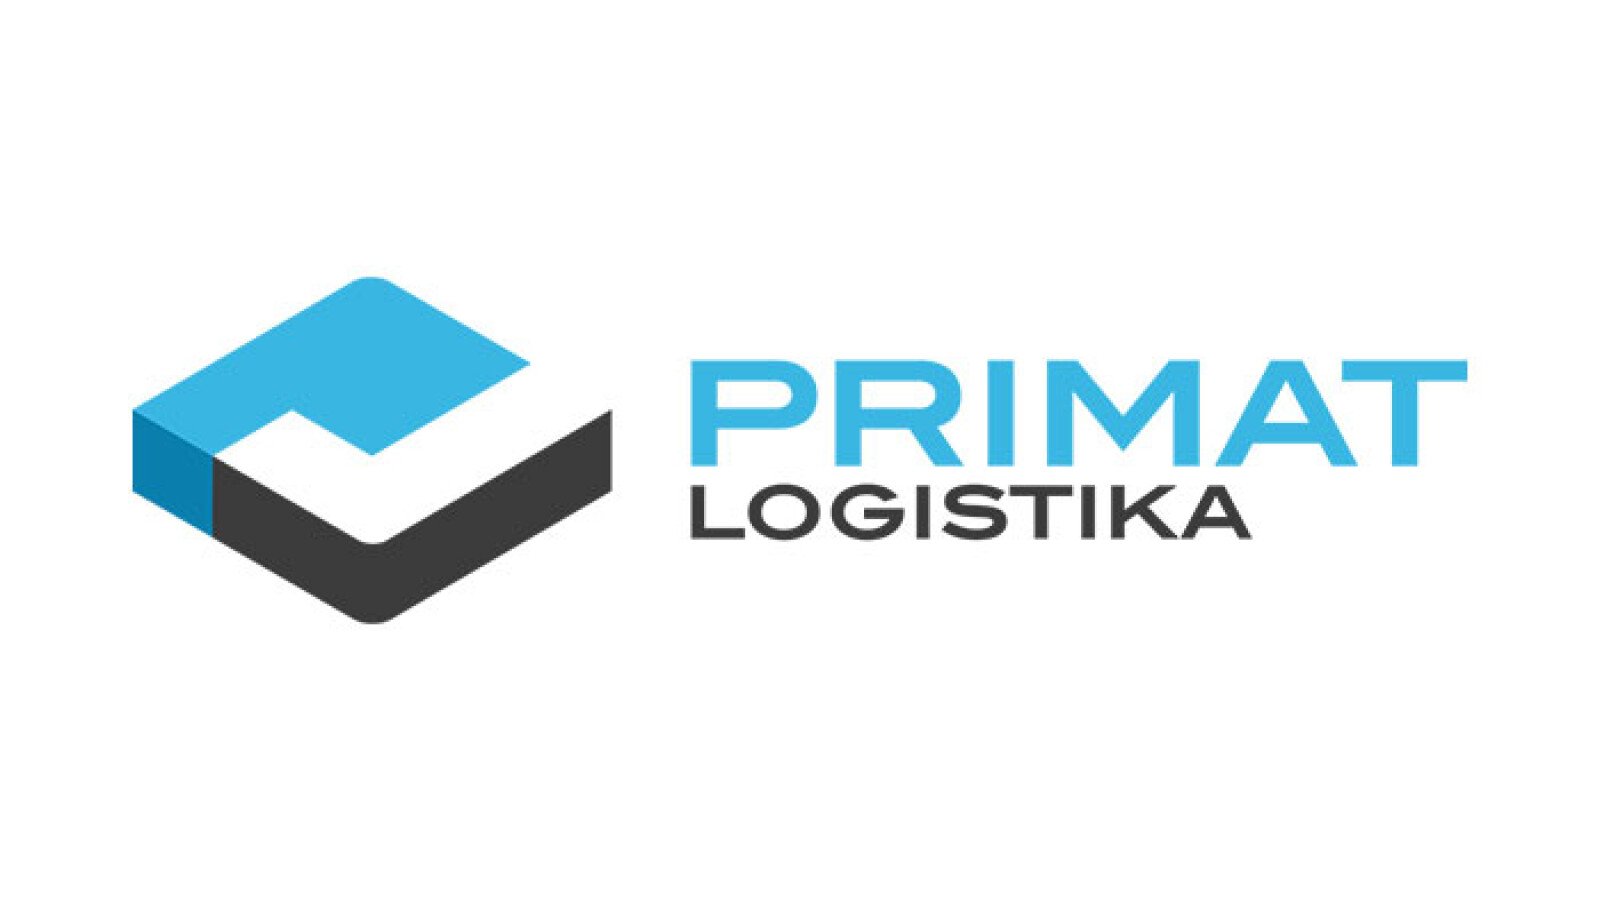 Primat logistika logo